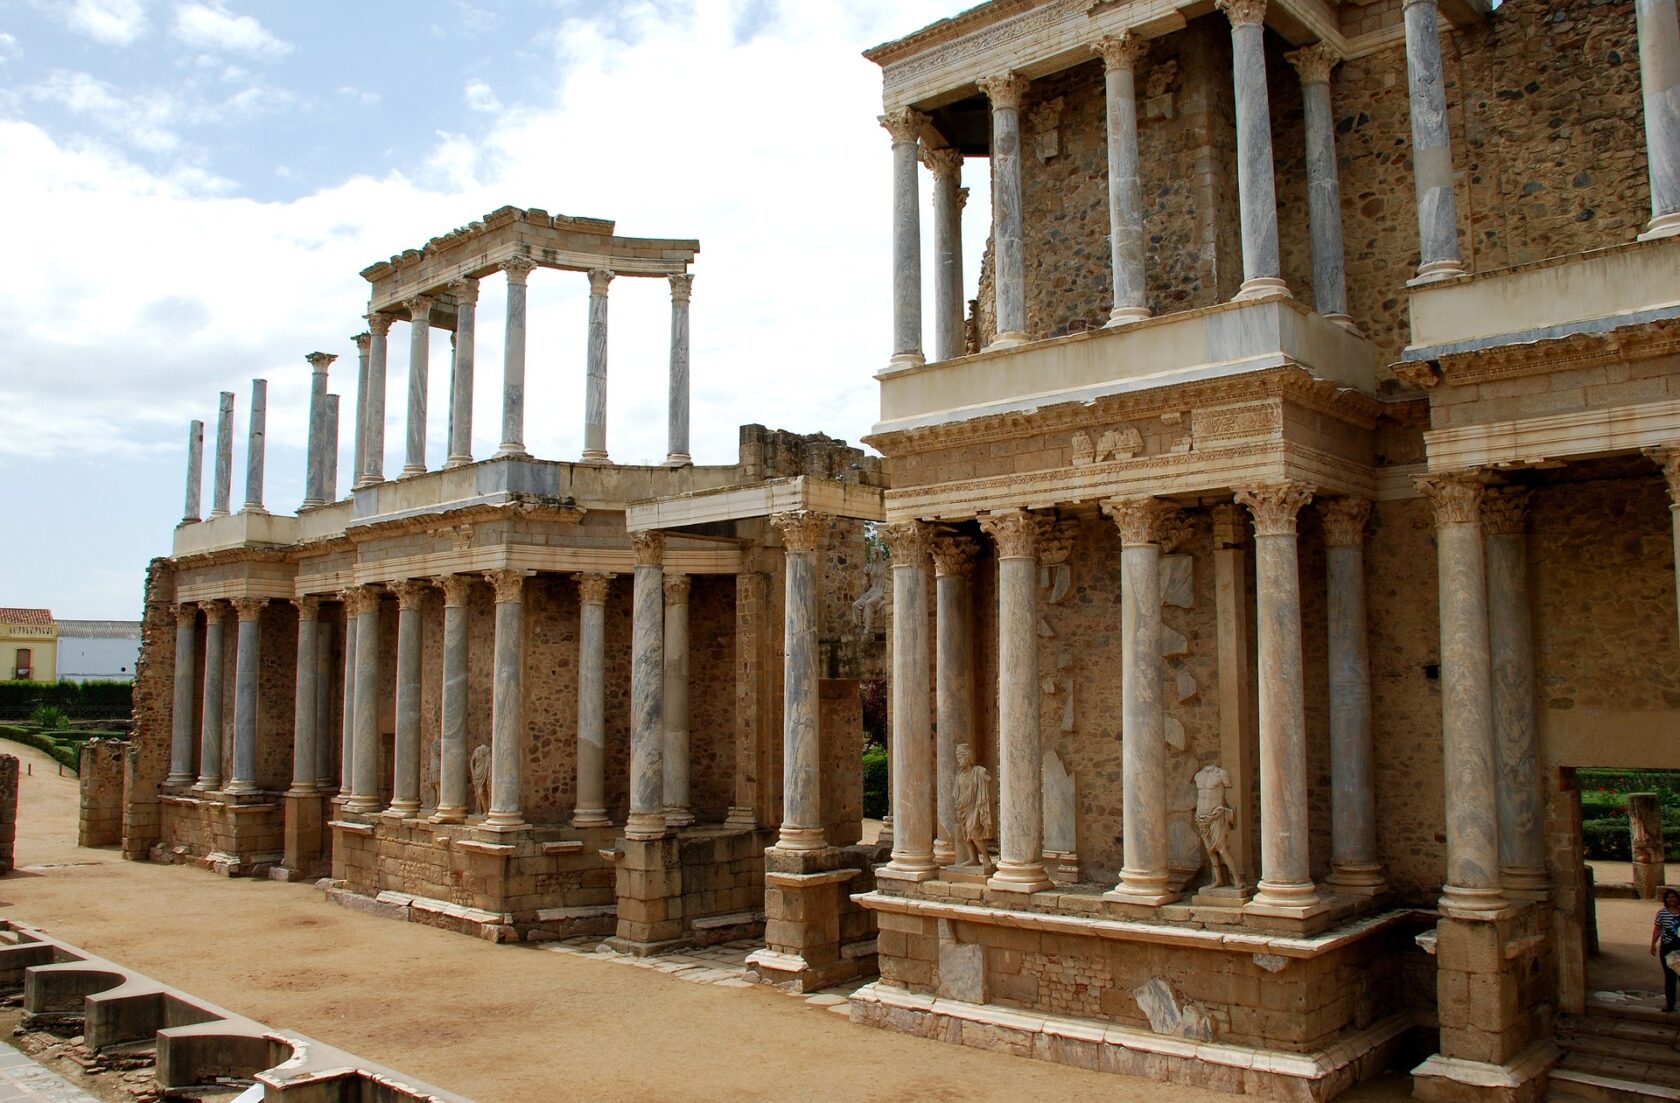 Roman Architecture in the city of Merida, Spain (an Atlantis site).